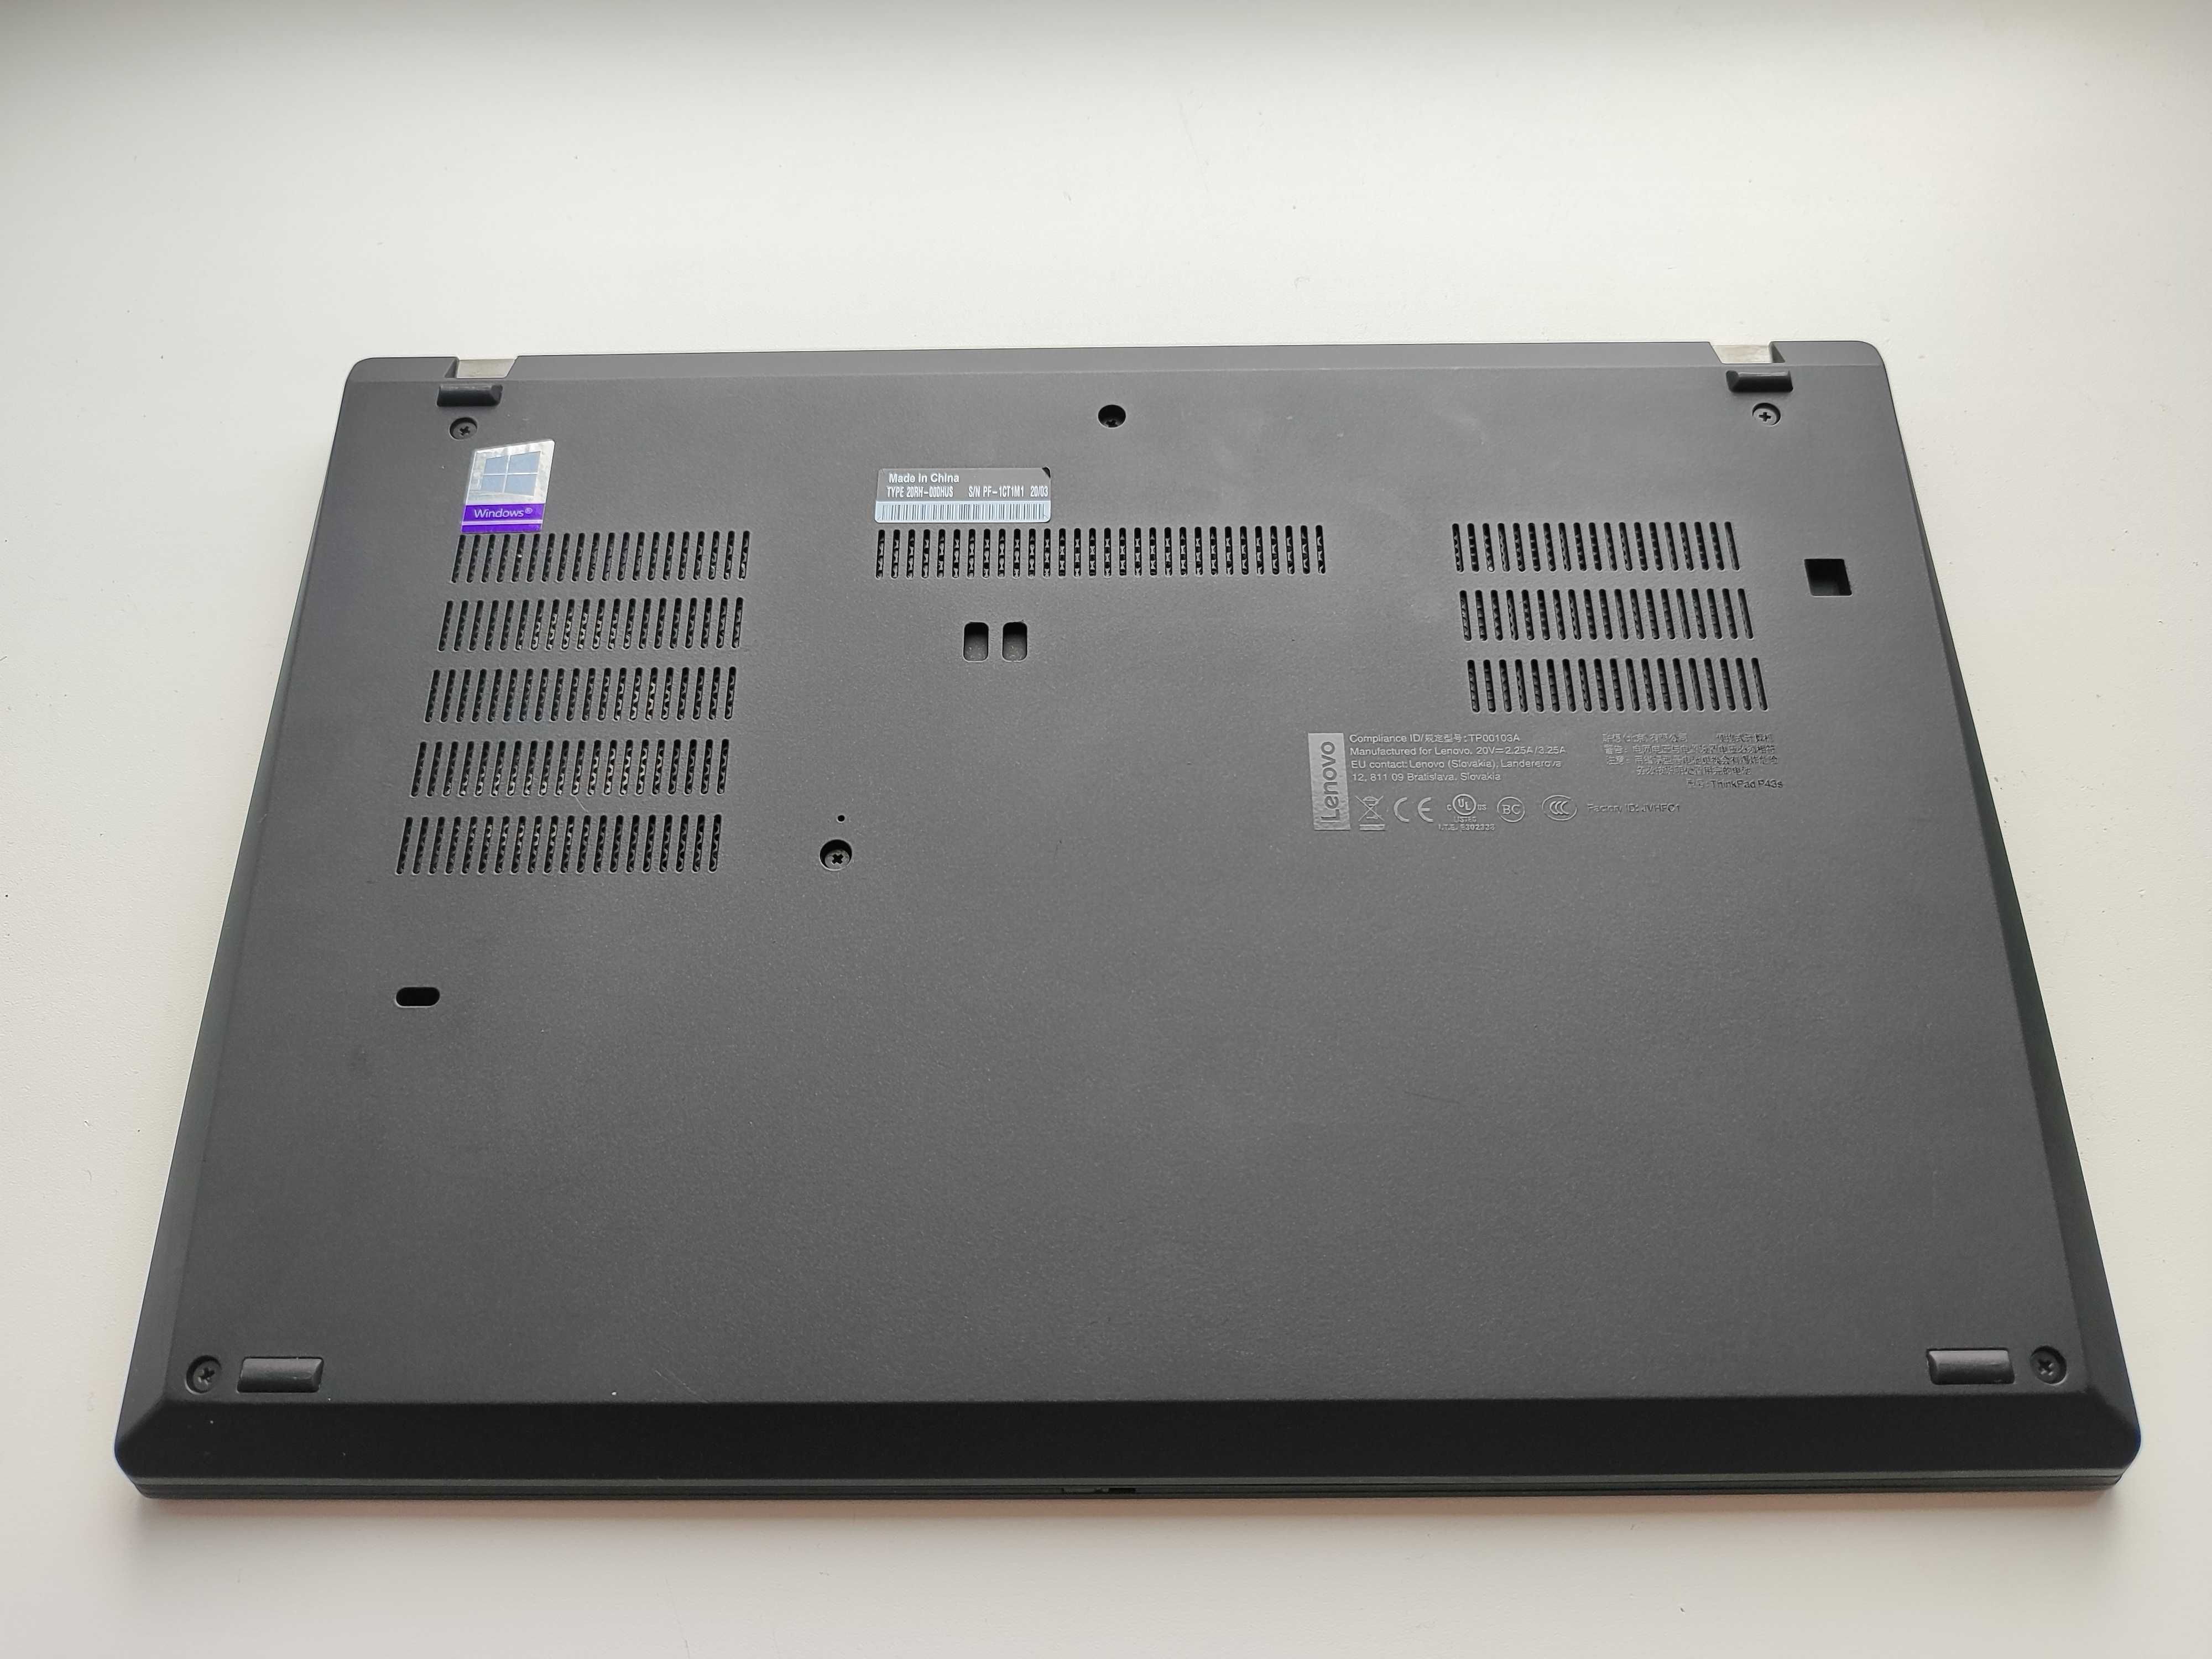 Lеnоvо ThinkPad Р43s/i7/16/500/14/FHD/IPS/WorkStation/TouchScreeen